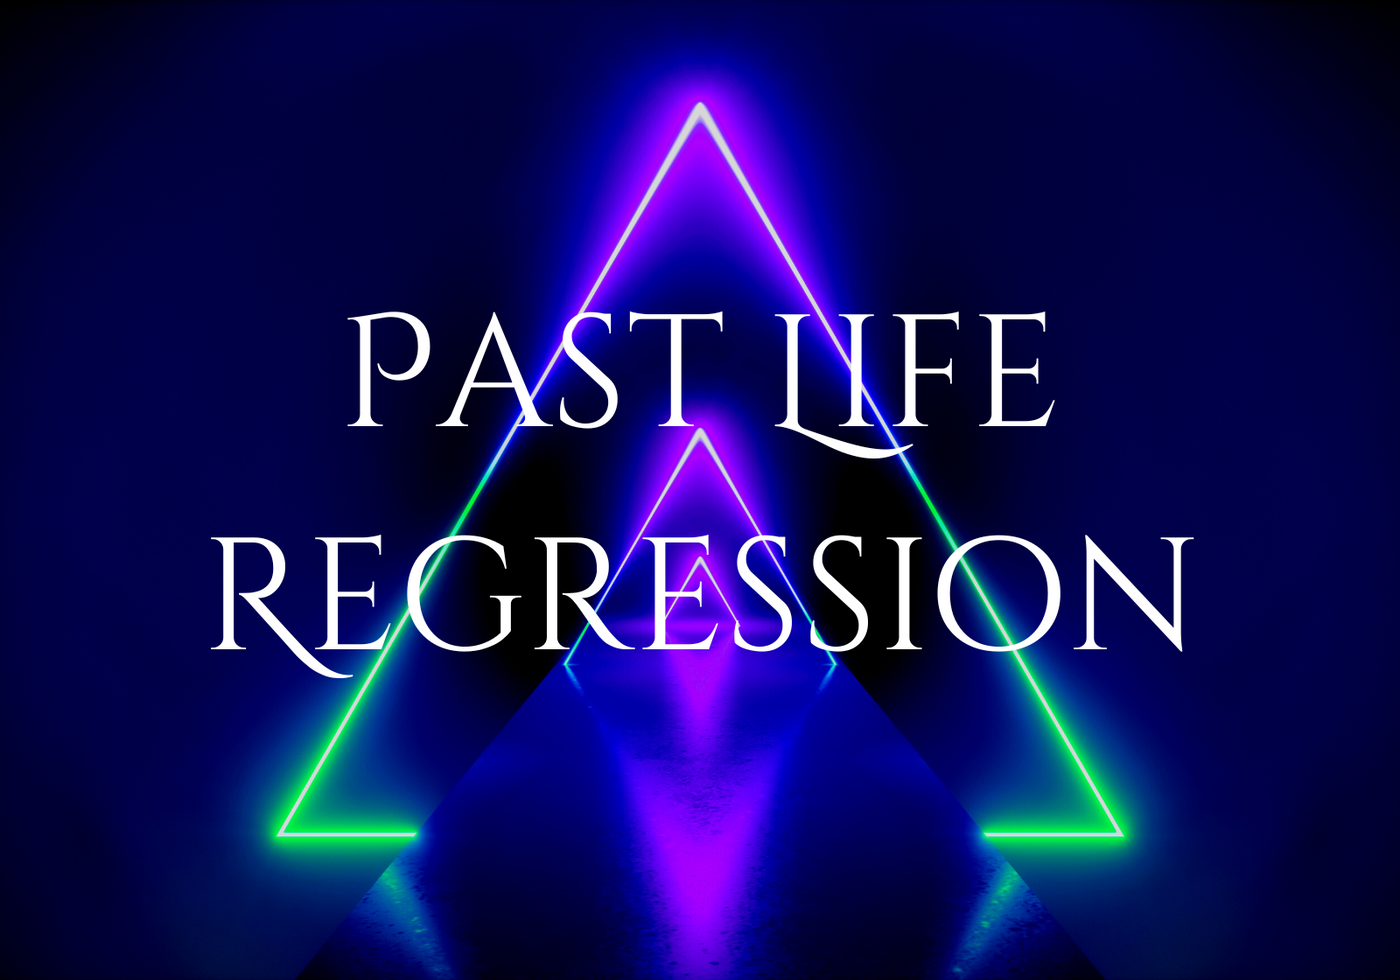 PAST LIFE REGRESSION